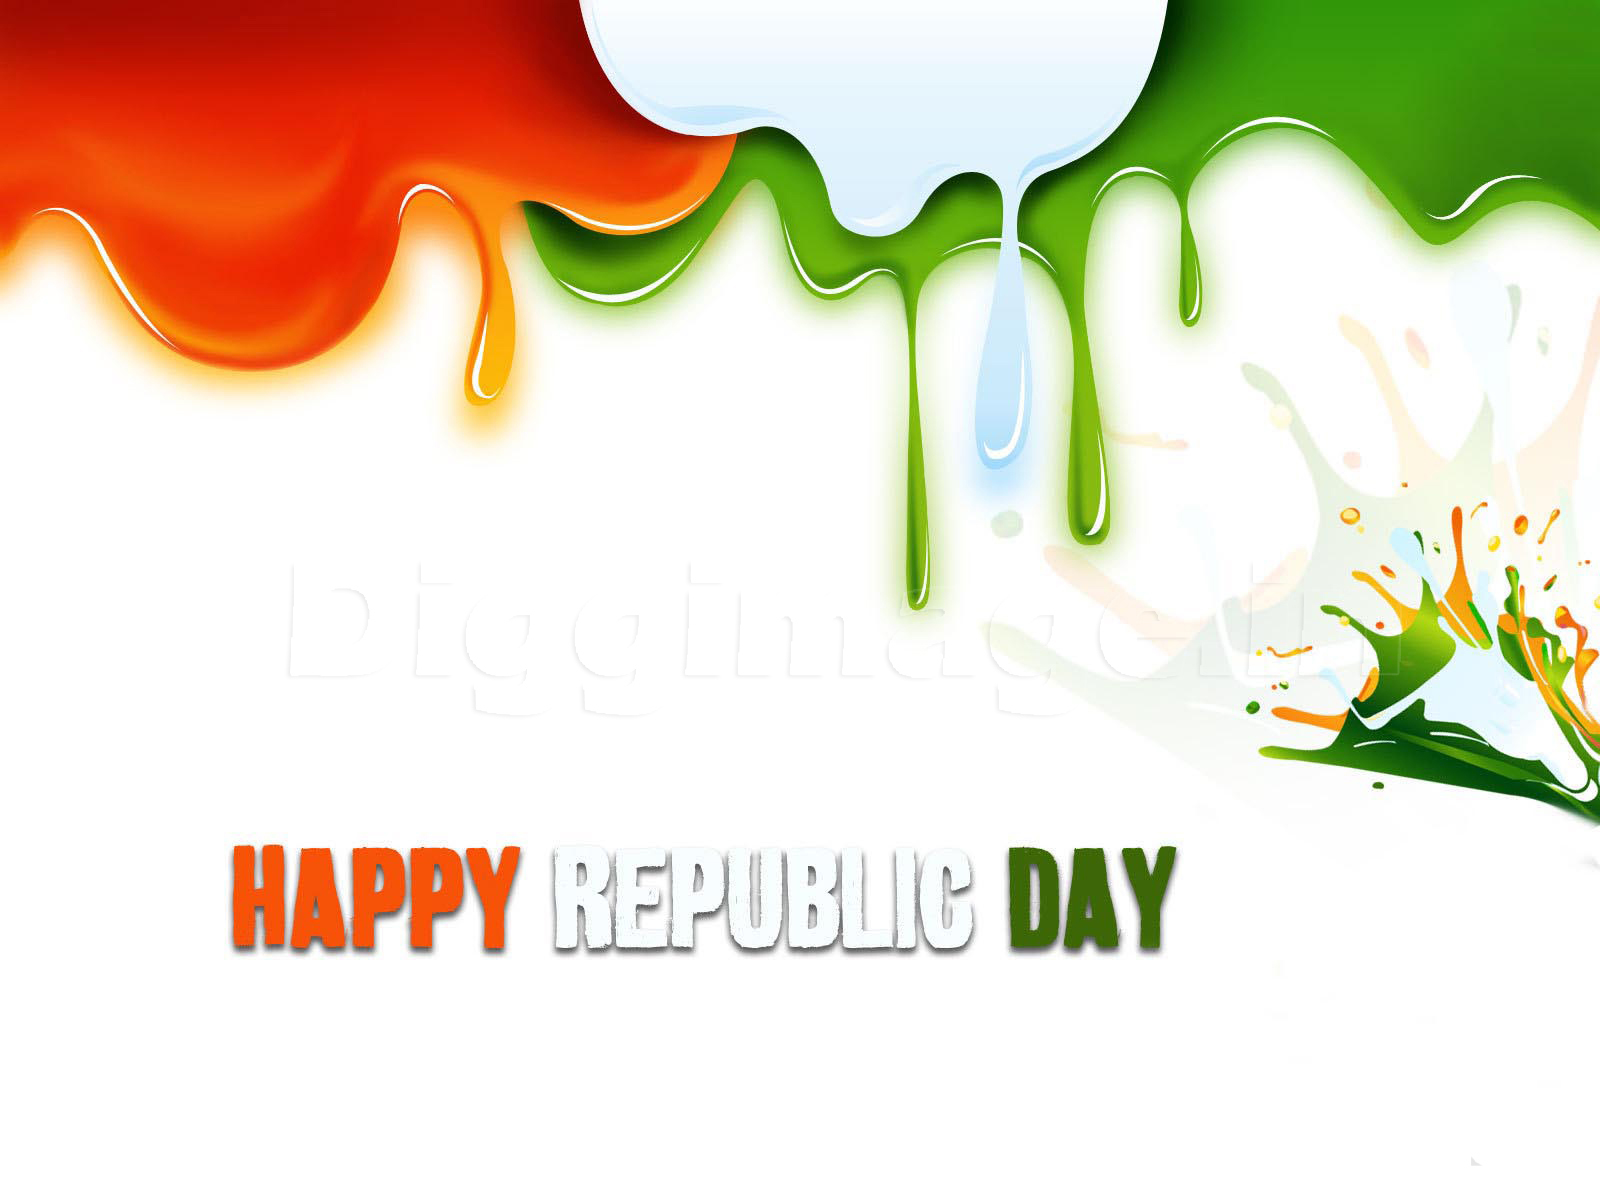 http://4.bp.blogspot.com/-mrwSMlCquWQ/UOfNa0MwGgI/AAAAAAAAAyA/XOdG2XxcJcY/s1600/indian+republic+day+greetings+hd+wallpaper.JPG